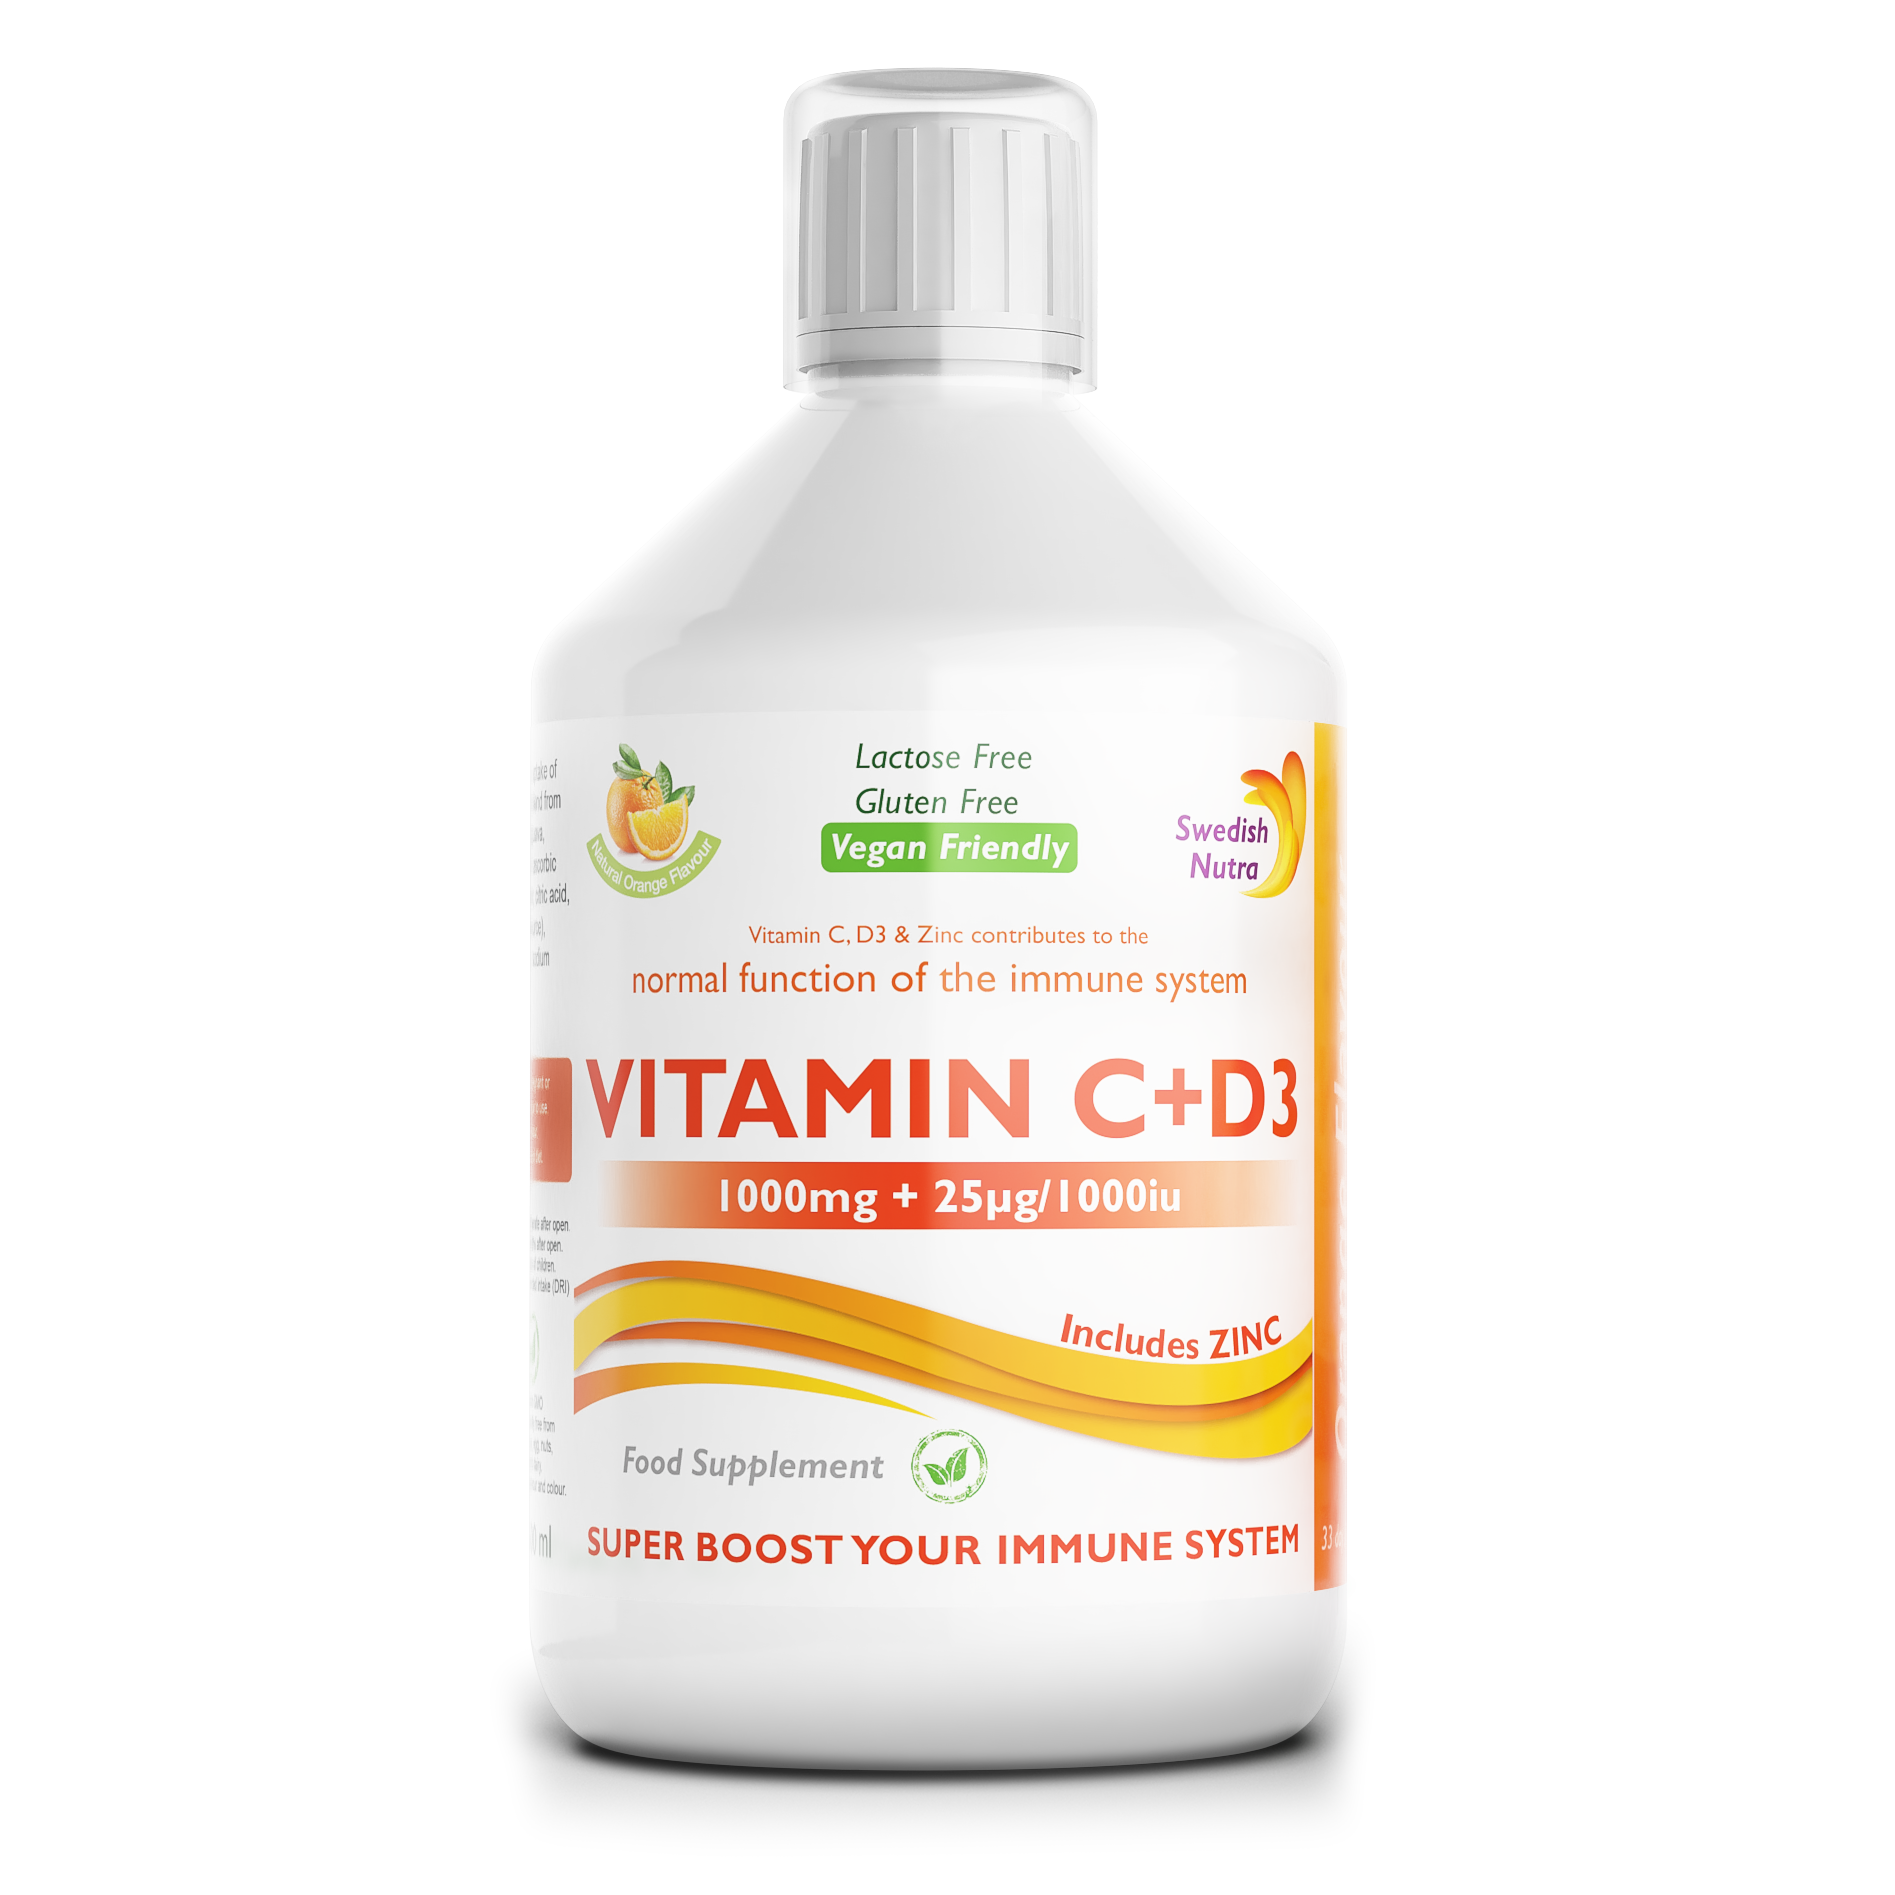 Swedish Nutra Vitamin C & Vitamin D3